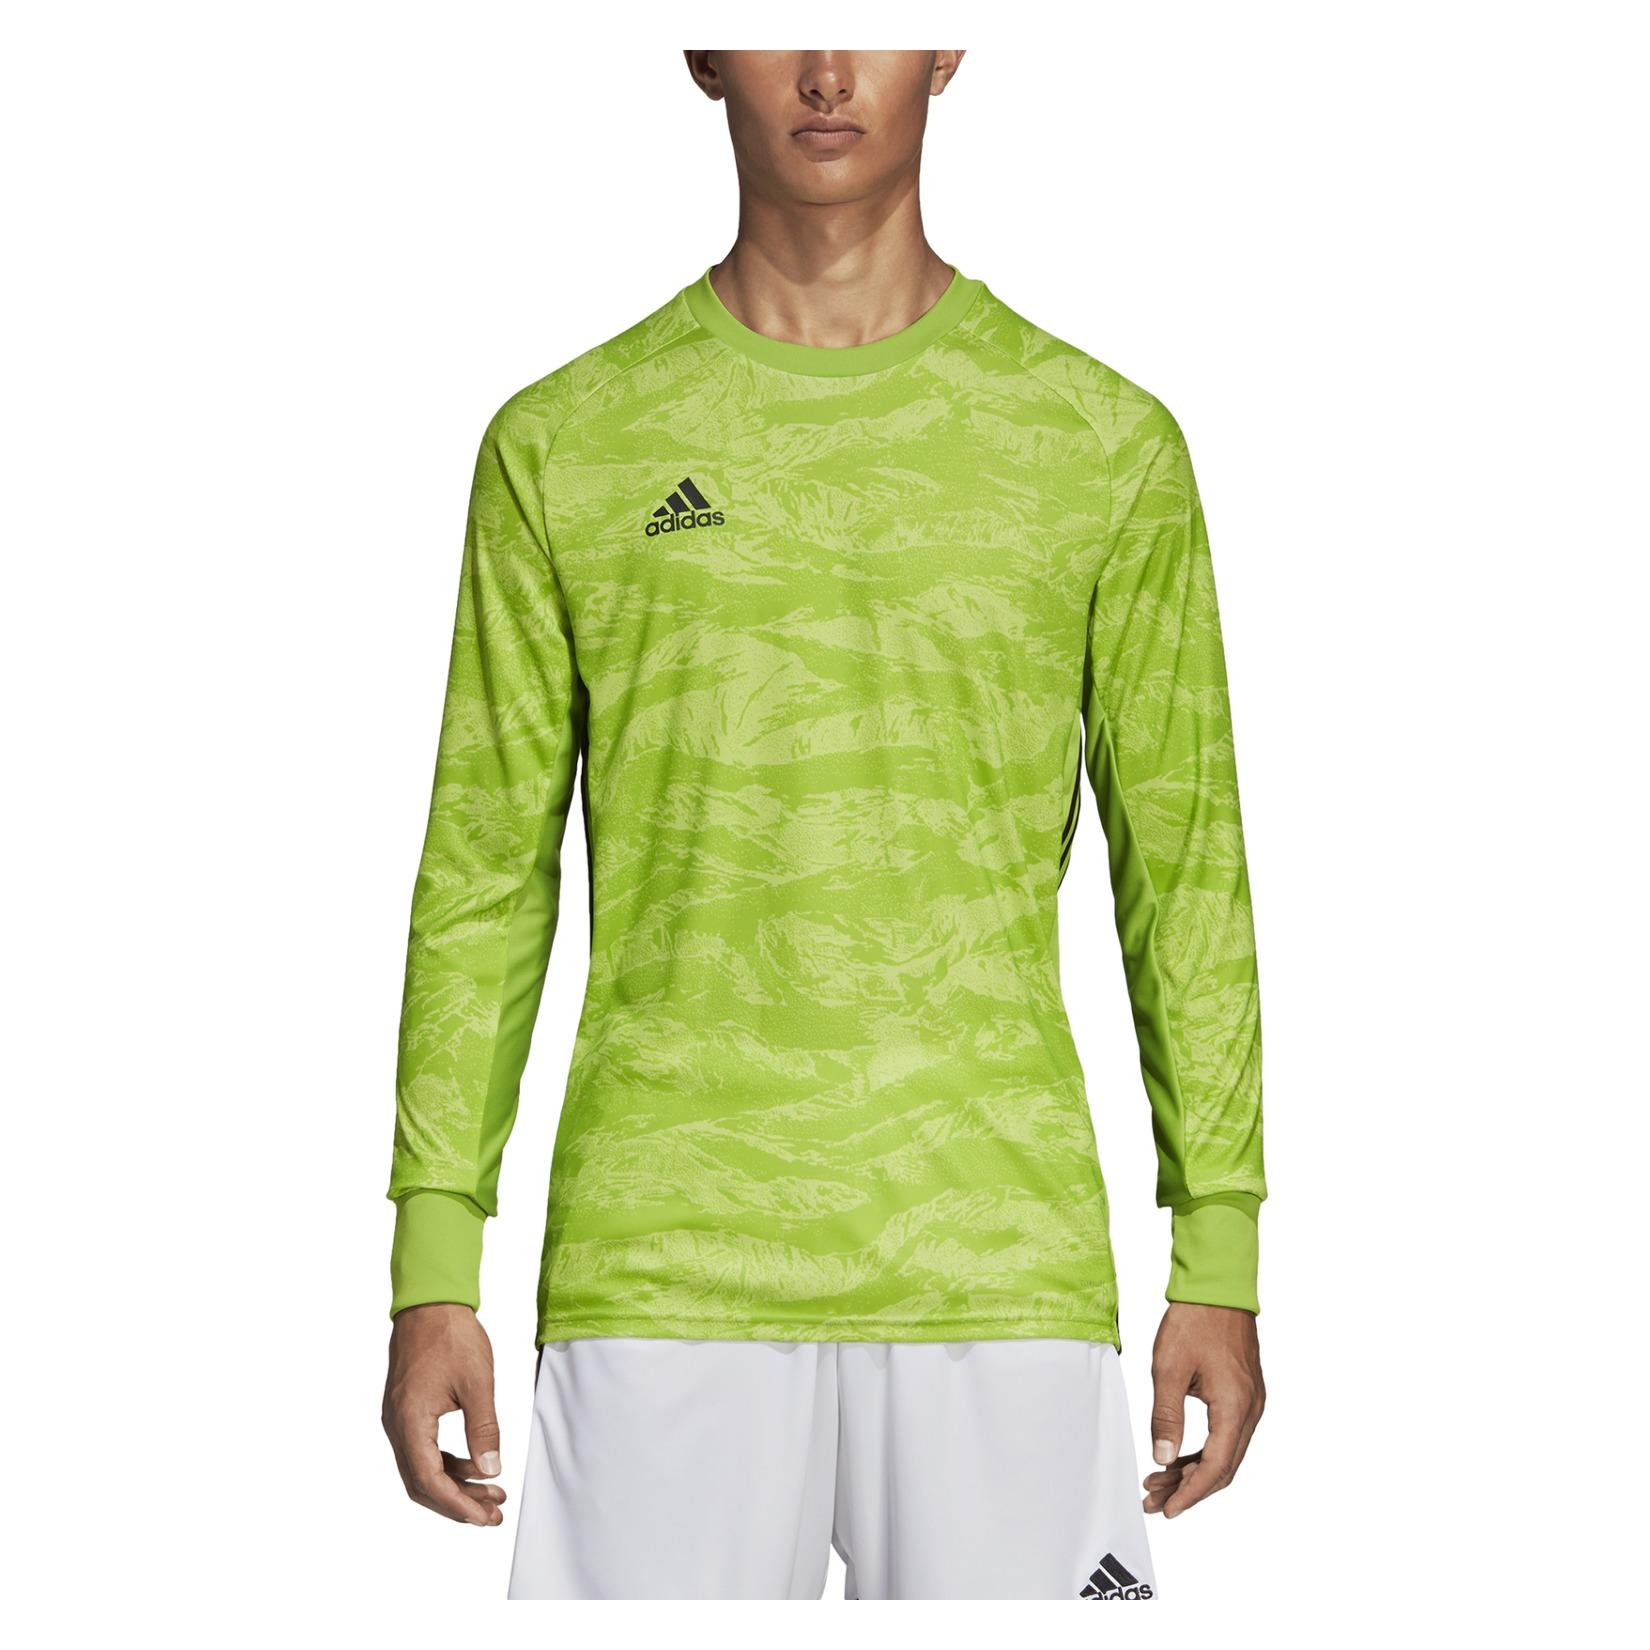 Adidas Adipro 19 Goalkeeper Jersey